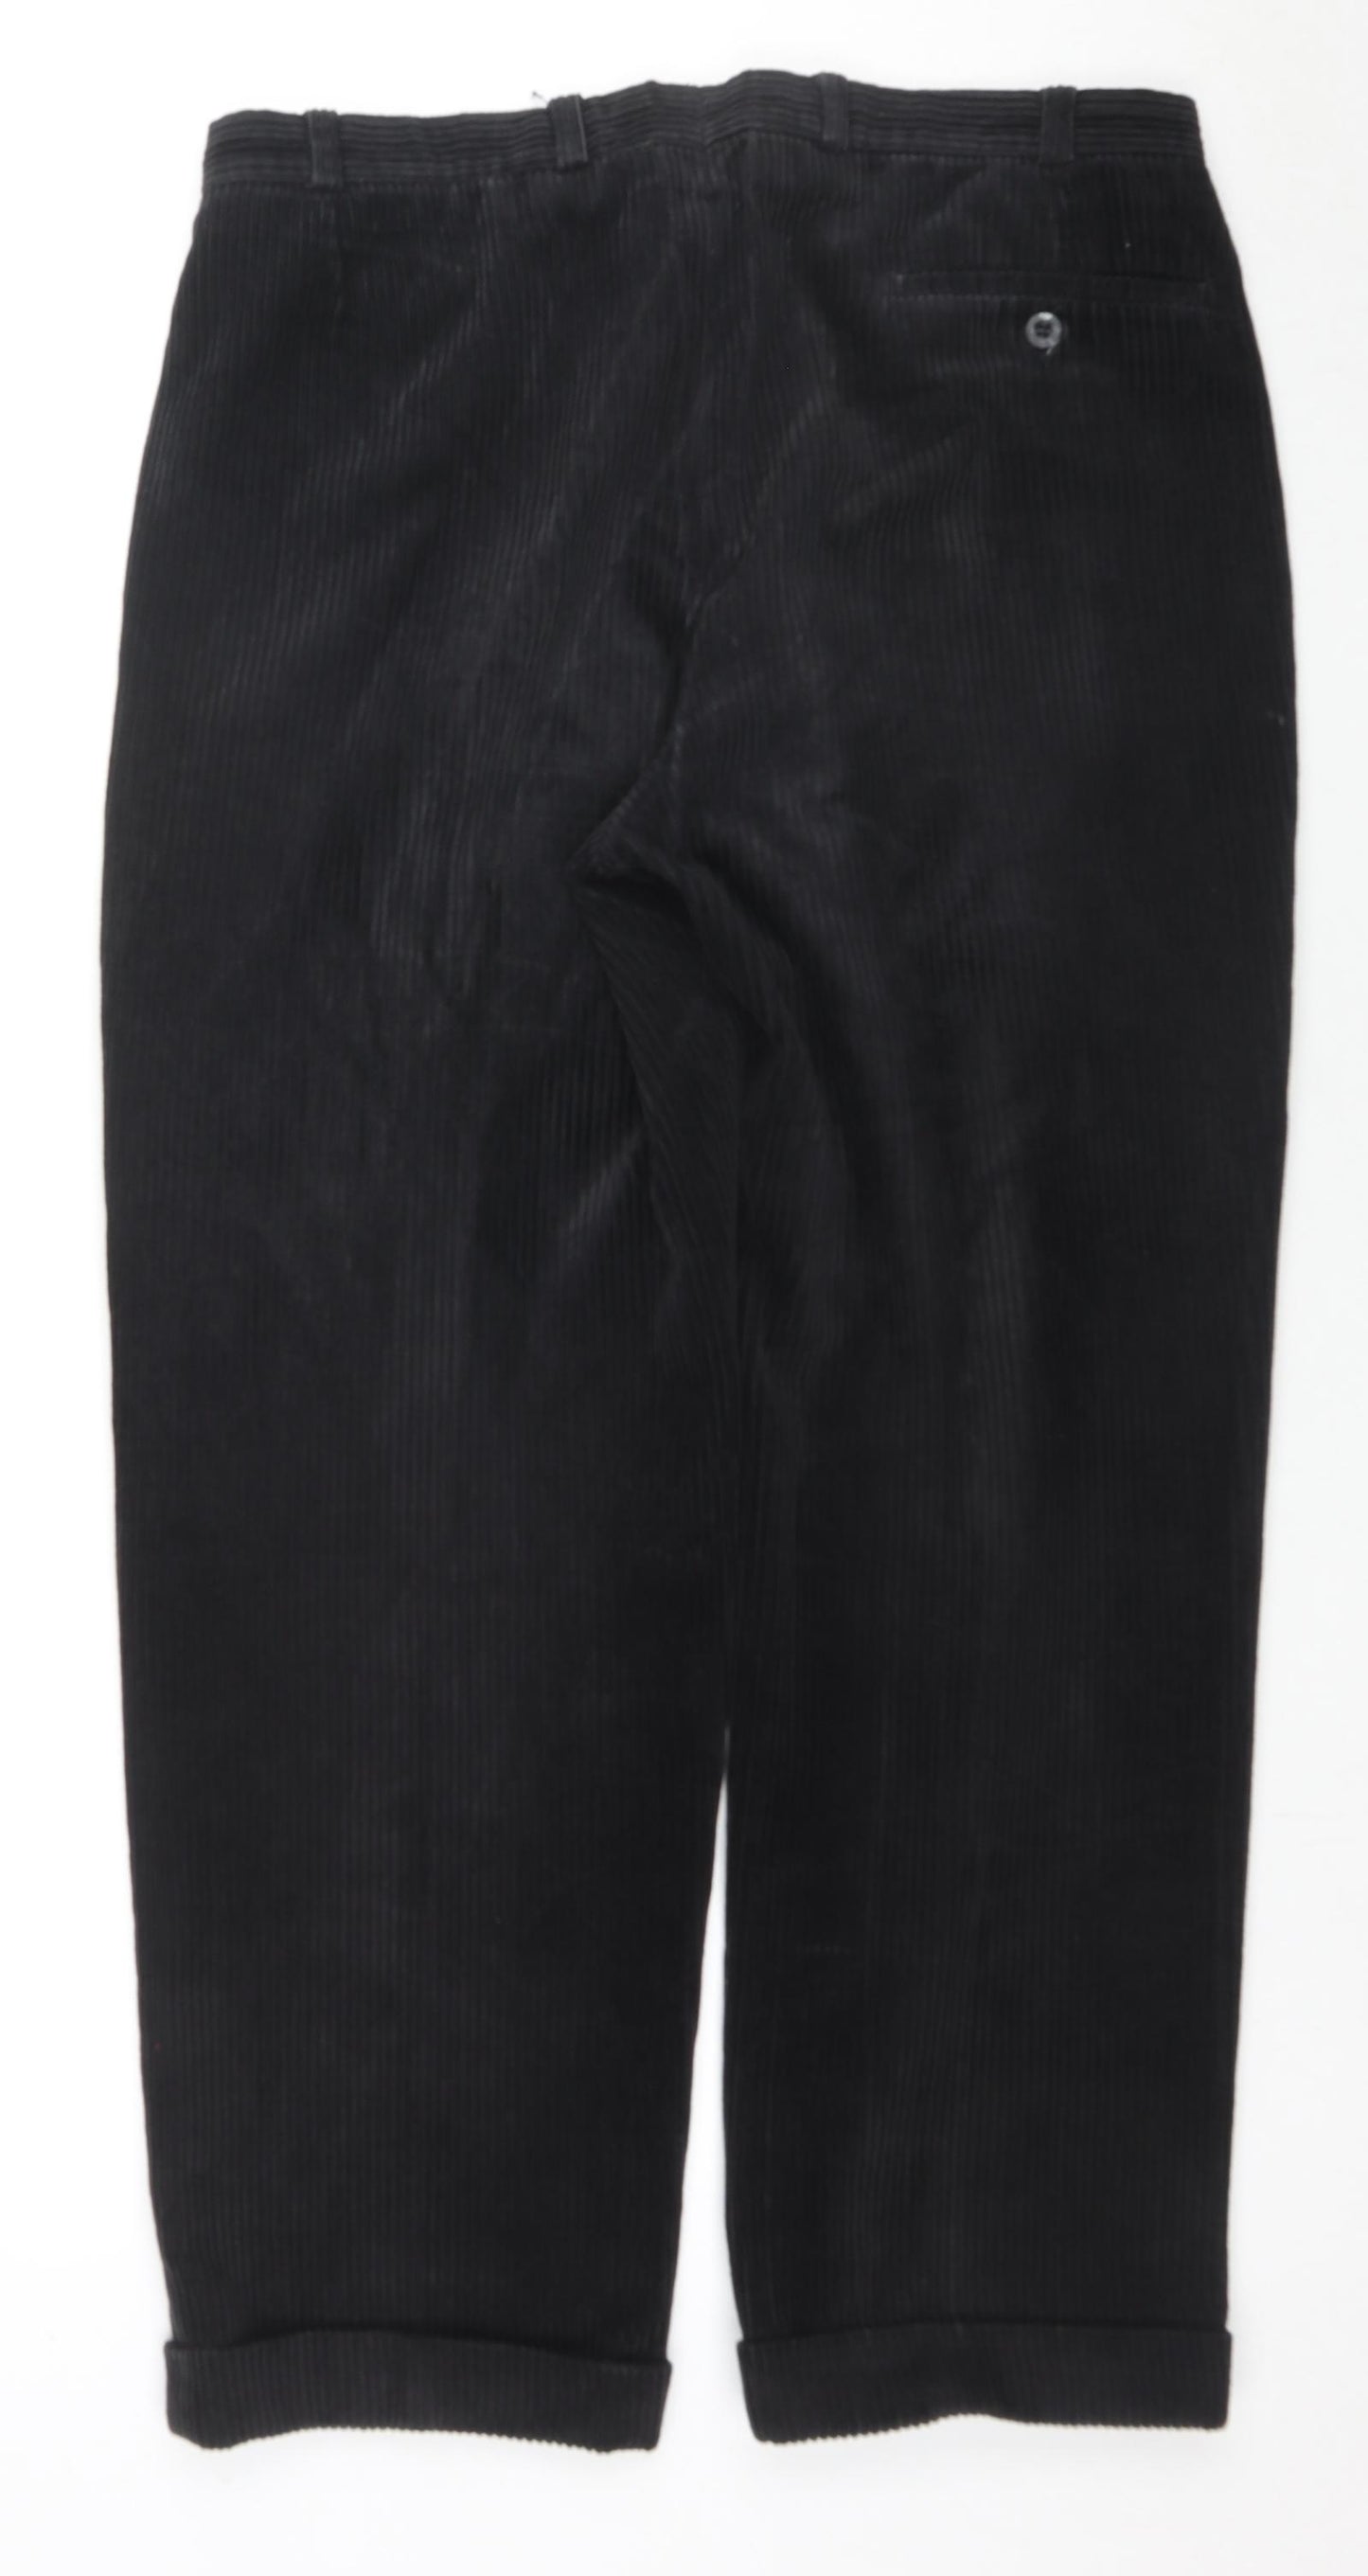 Sangan Mens Black Cotton Trousers Size 34 in L27 in Regular Zip